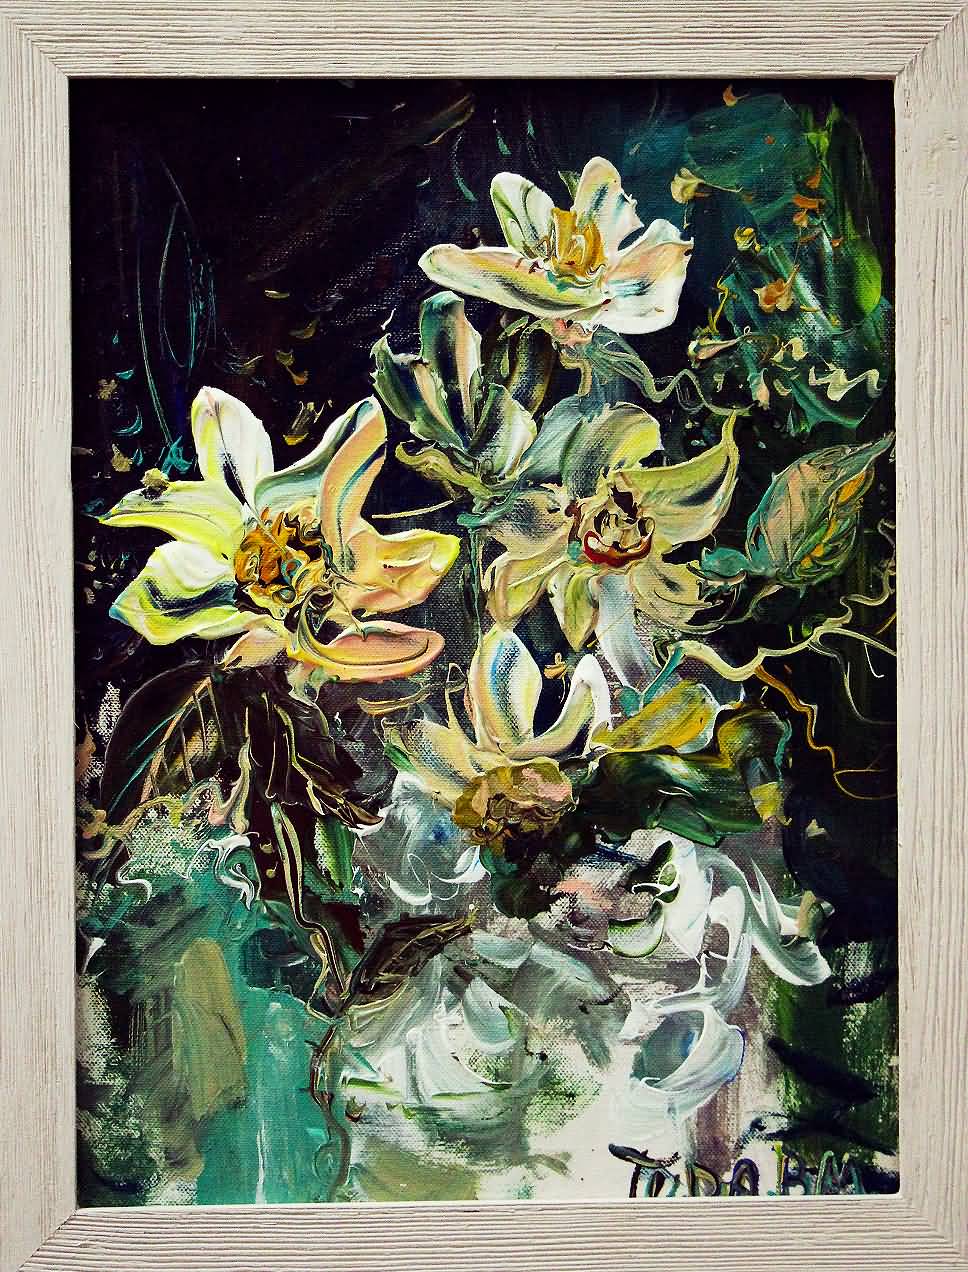 07. Flowers. Oil on canvas, 2021